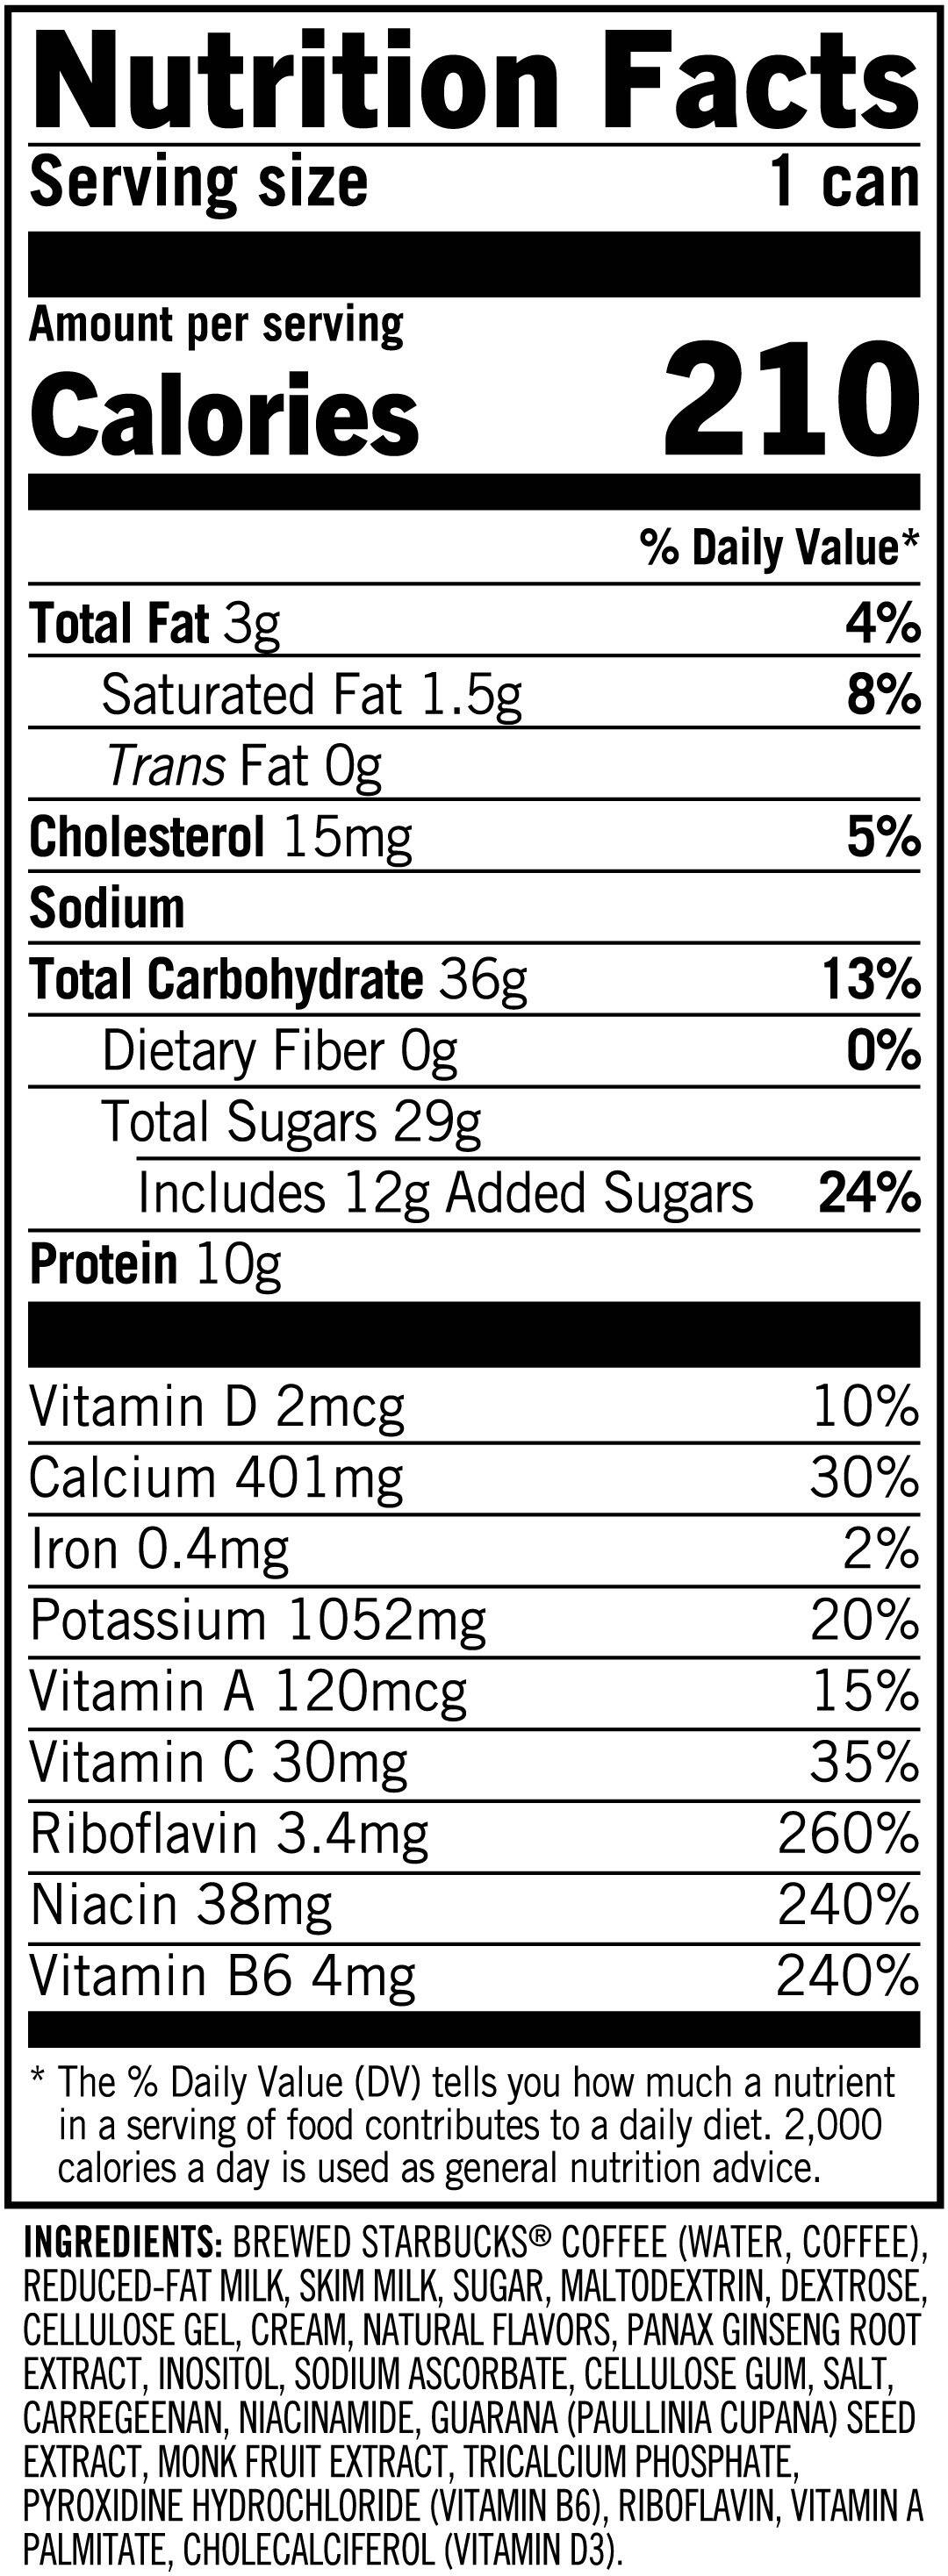 Image describing nutrition information for product Starbucks Tripleshot Energy Dark Chocolate